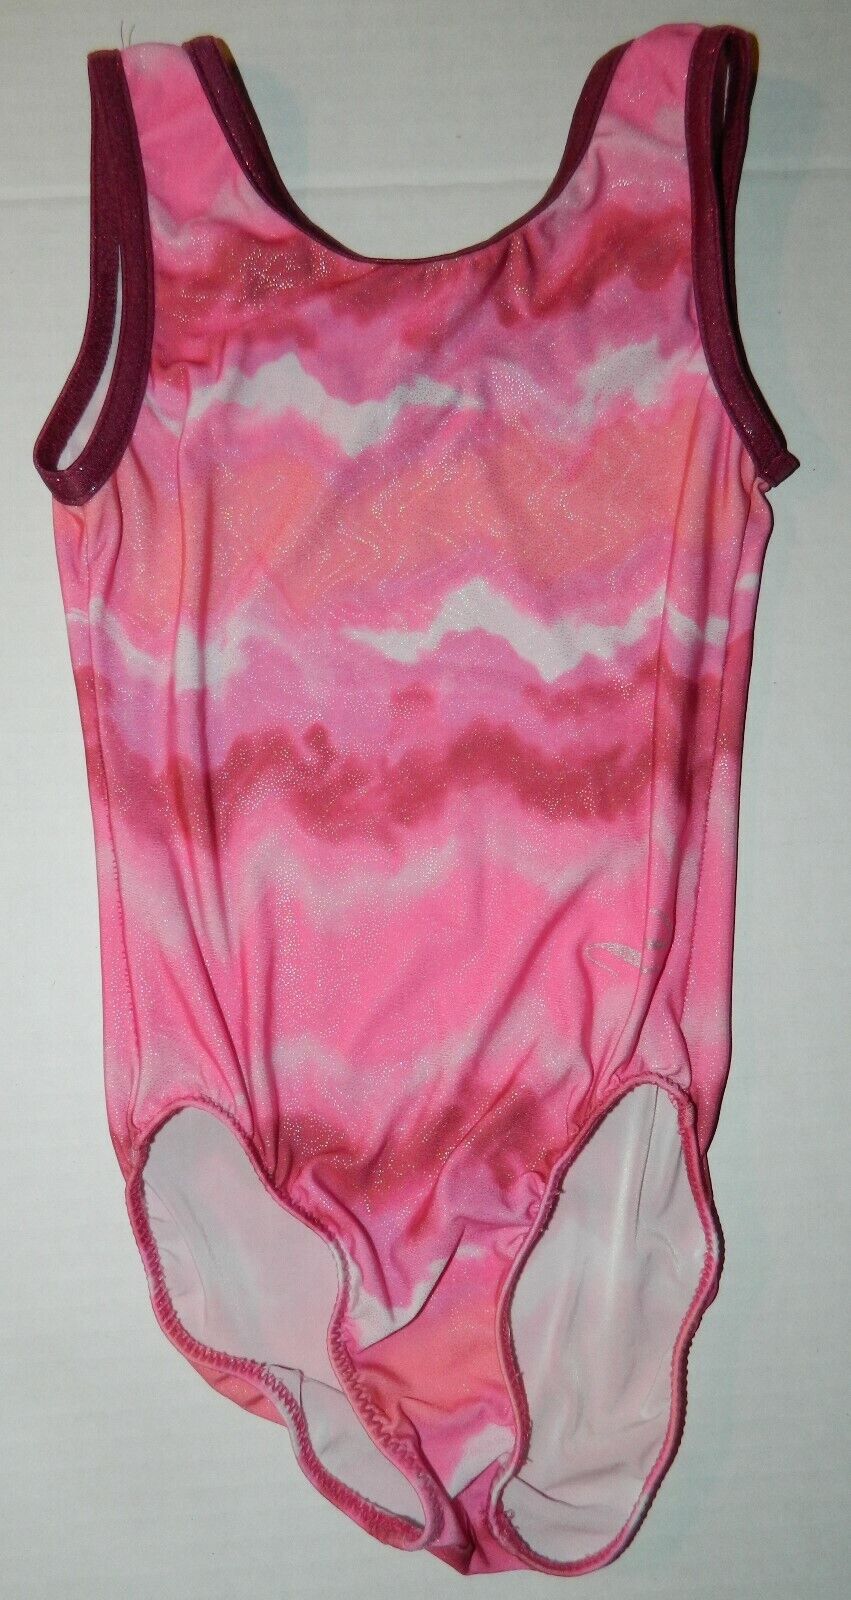 DREAMLIGHT girls Pink Tie Dye Sparkle GYMNASTICS LEOTARD 7 8